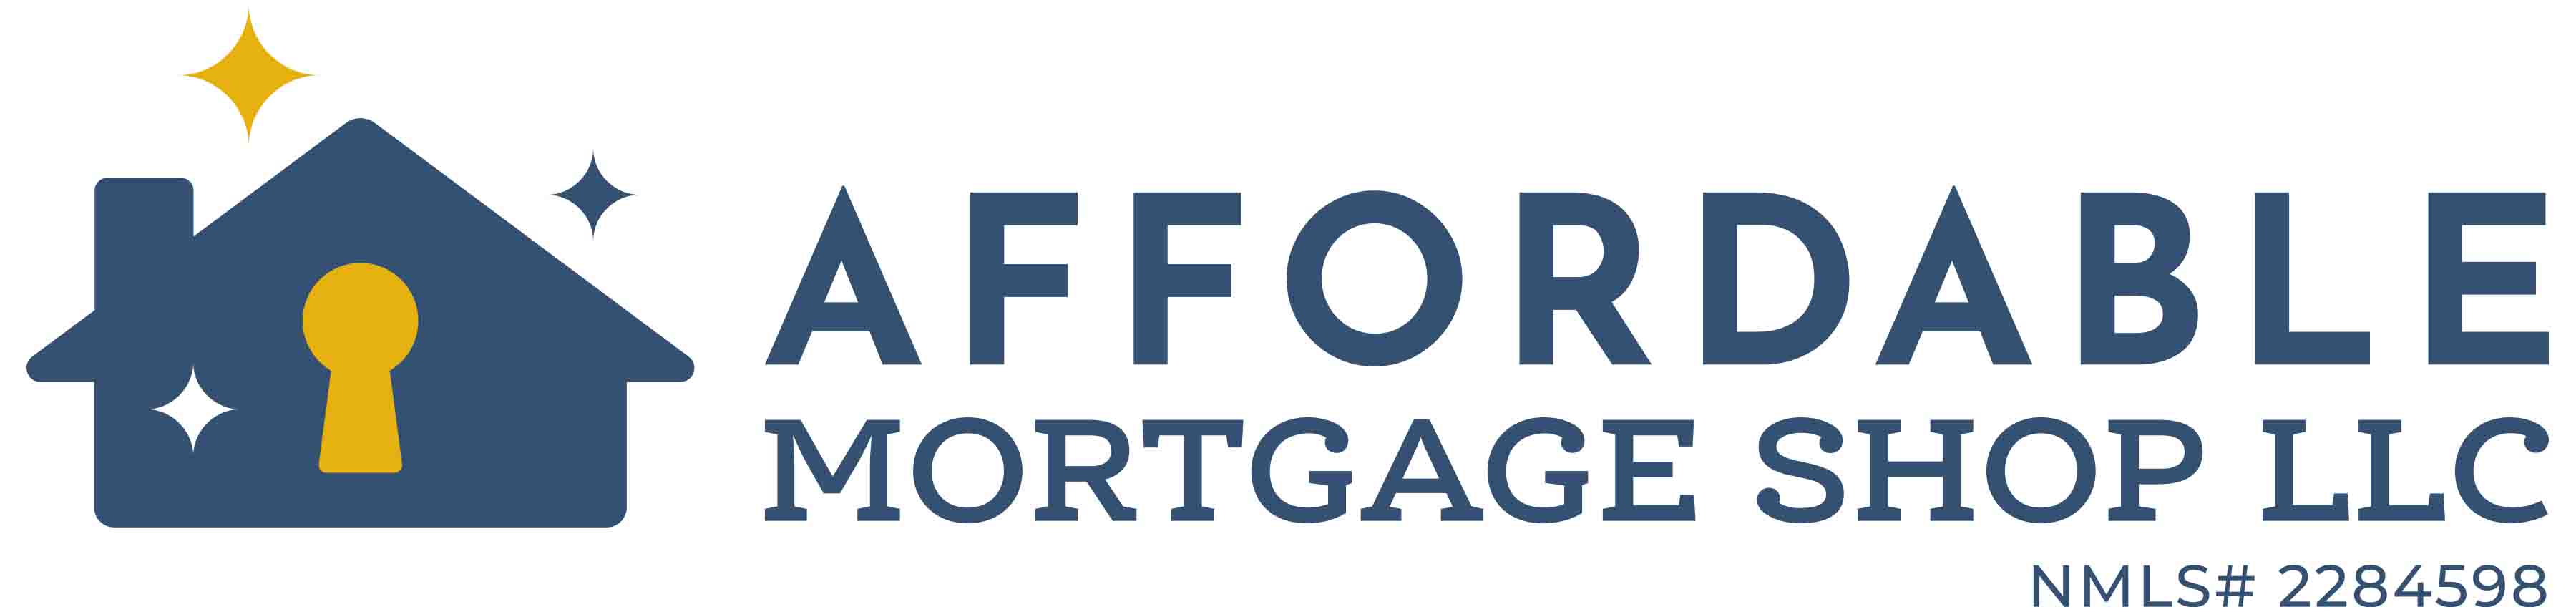 Affordable-Mortgage-Shop-LLC-logo.jpg